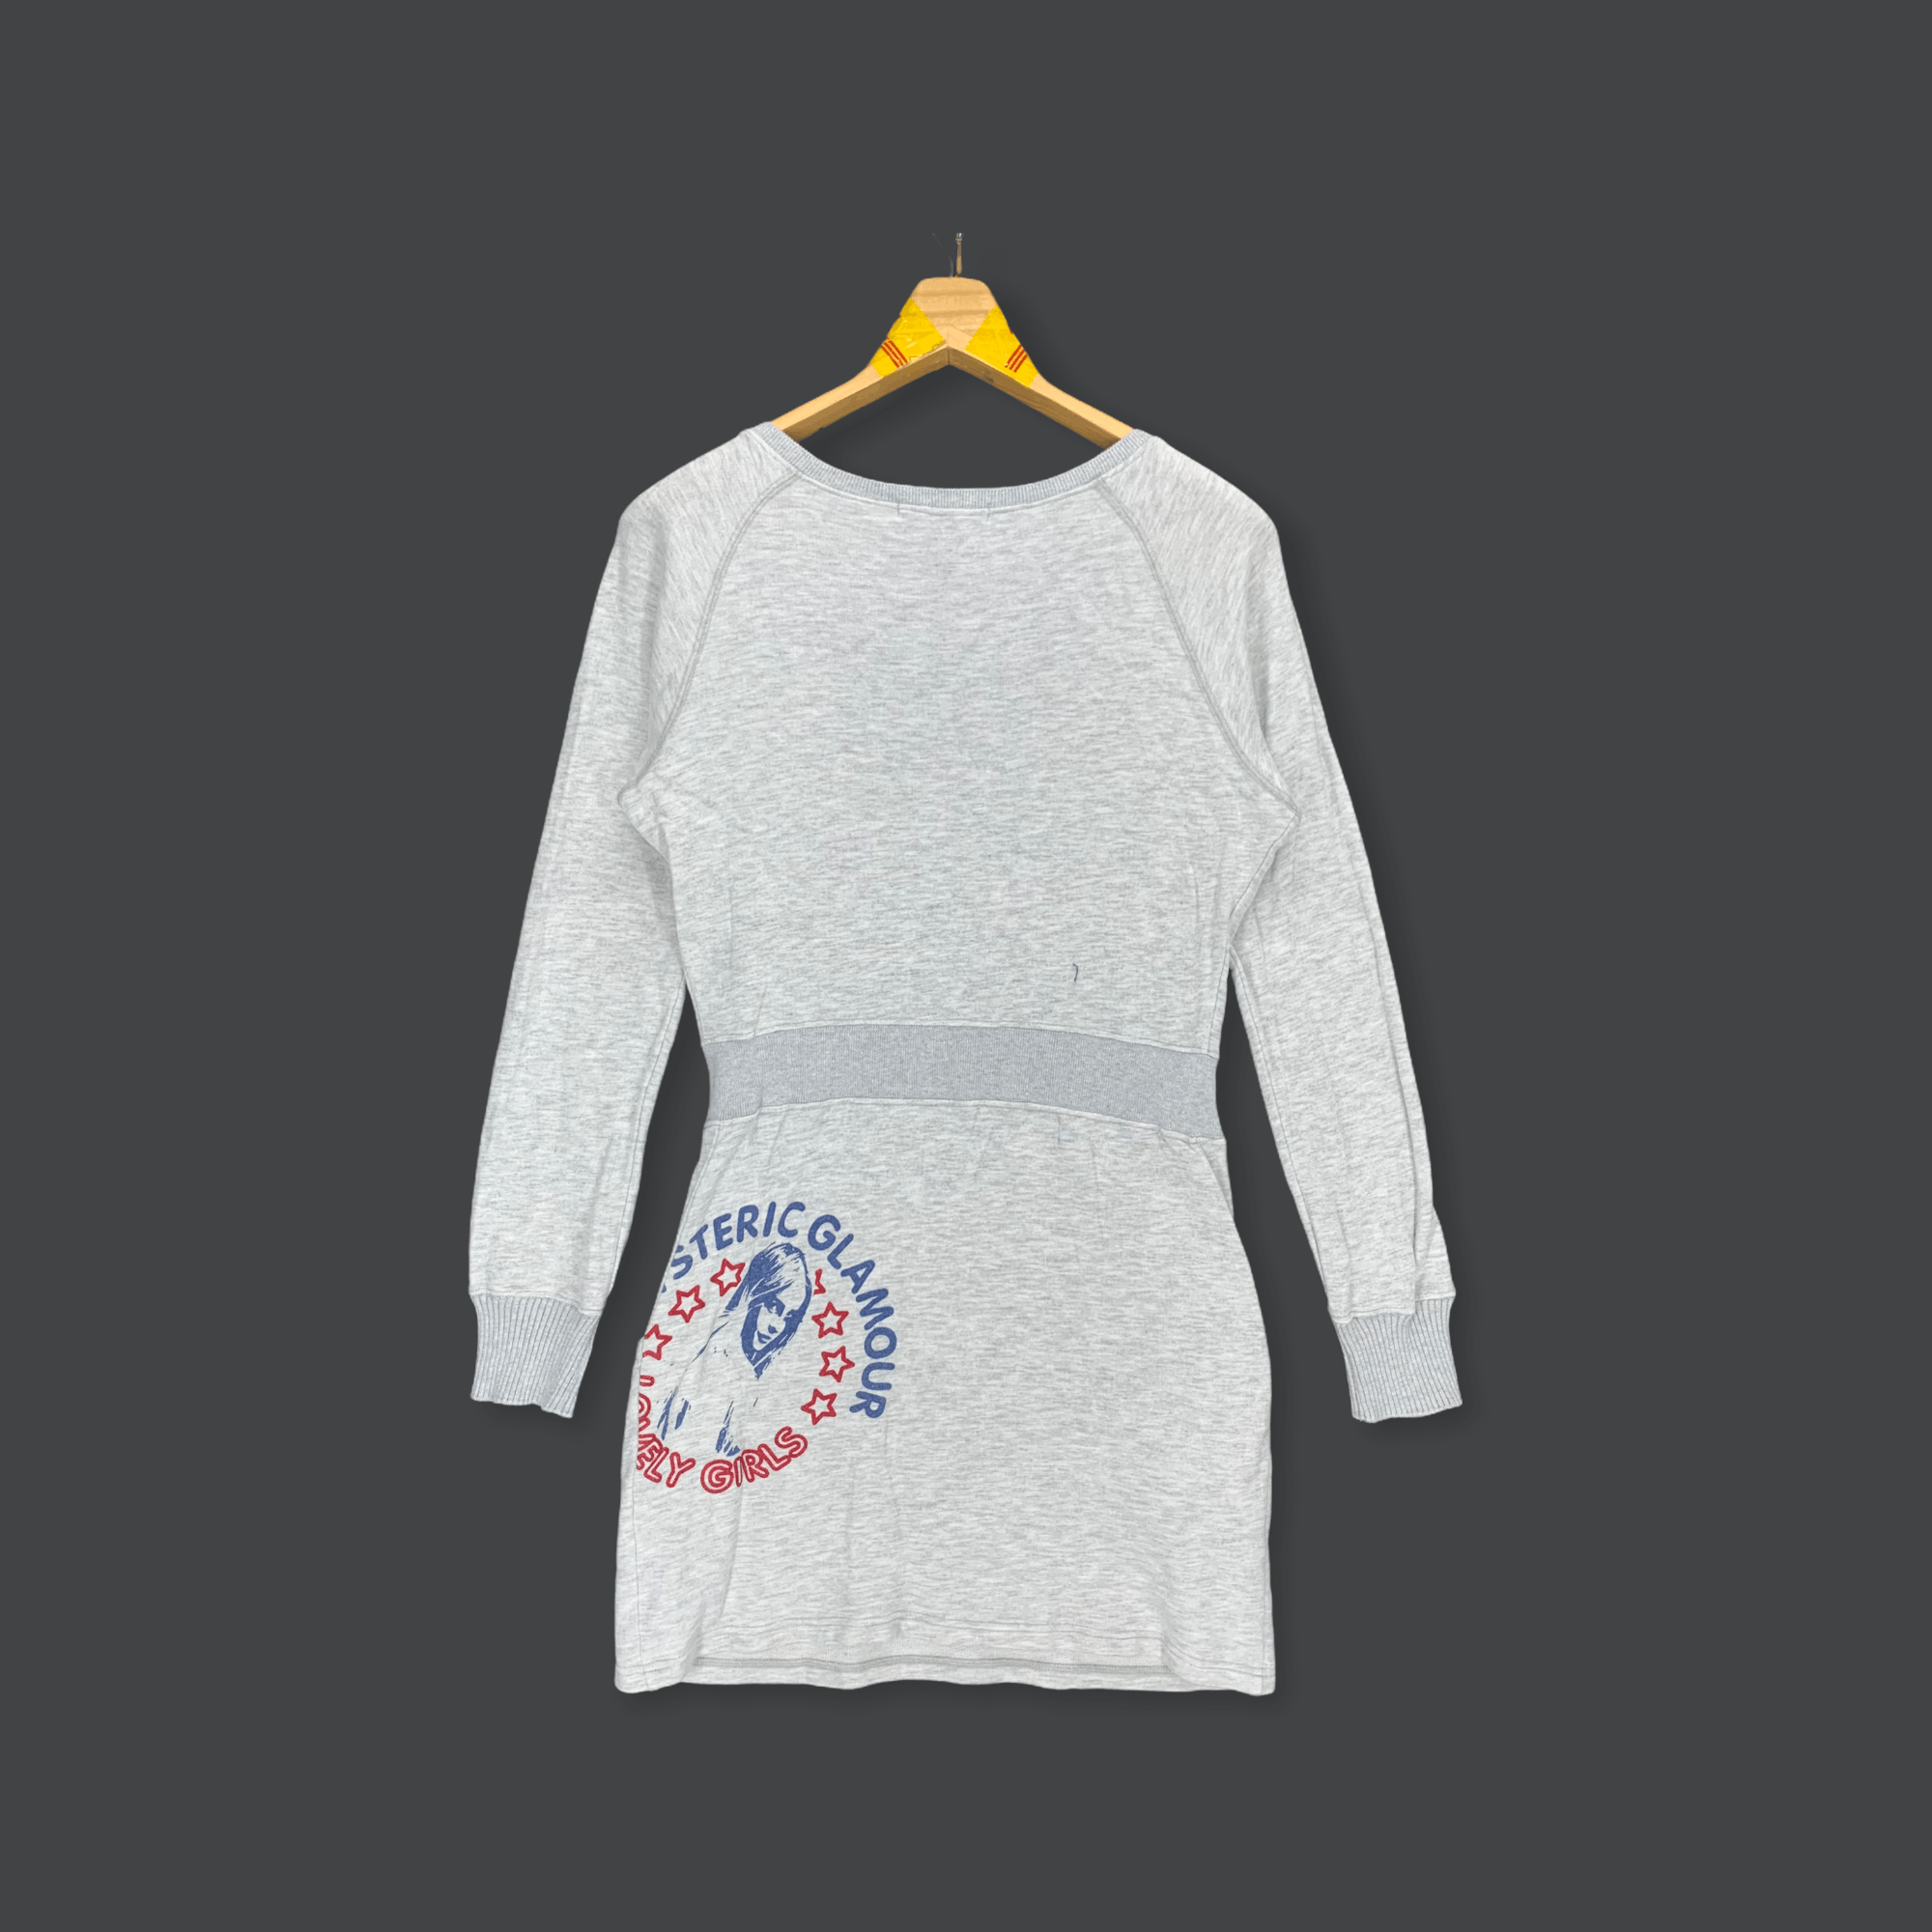 Hysteric Glamour Big Logo Women’s Sweatshirts #3062-113 - 7